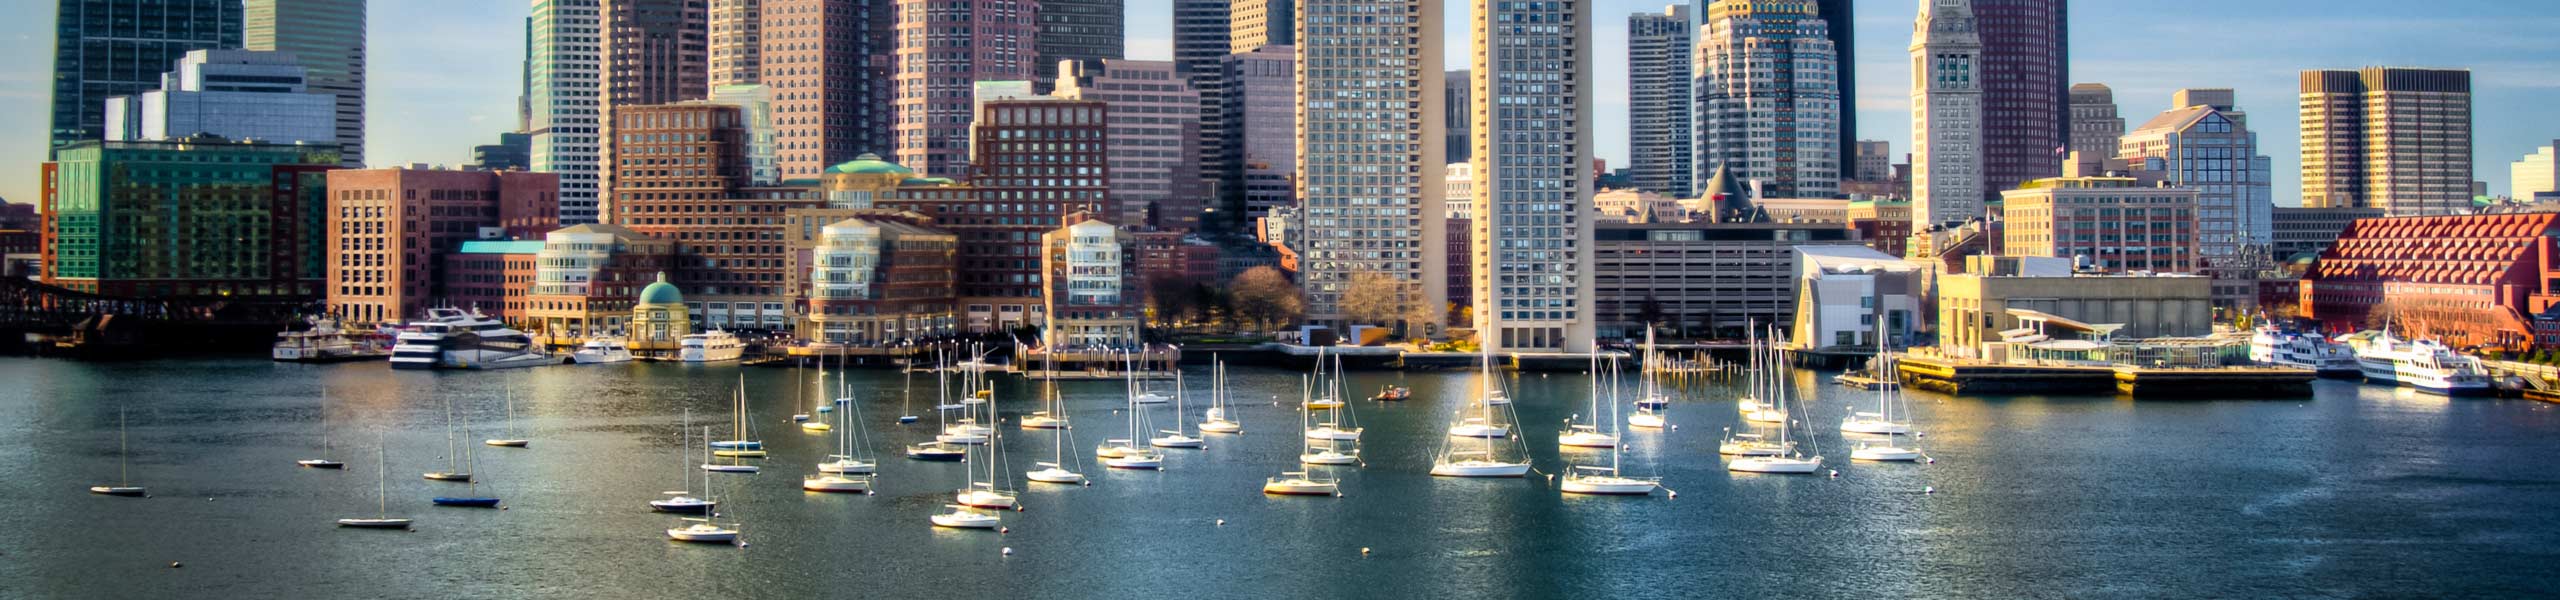 Boston skyline from waterfront